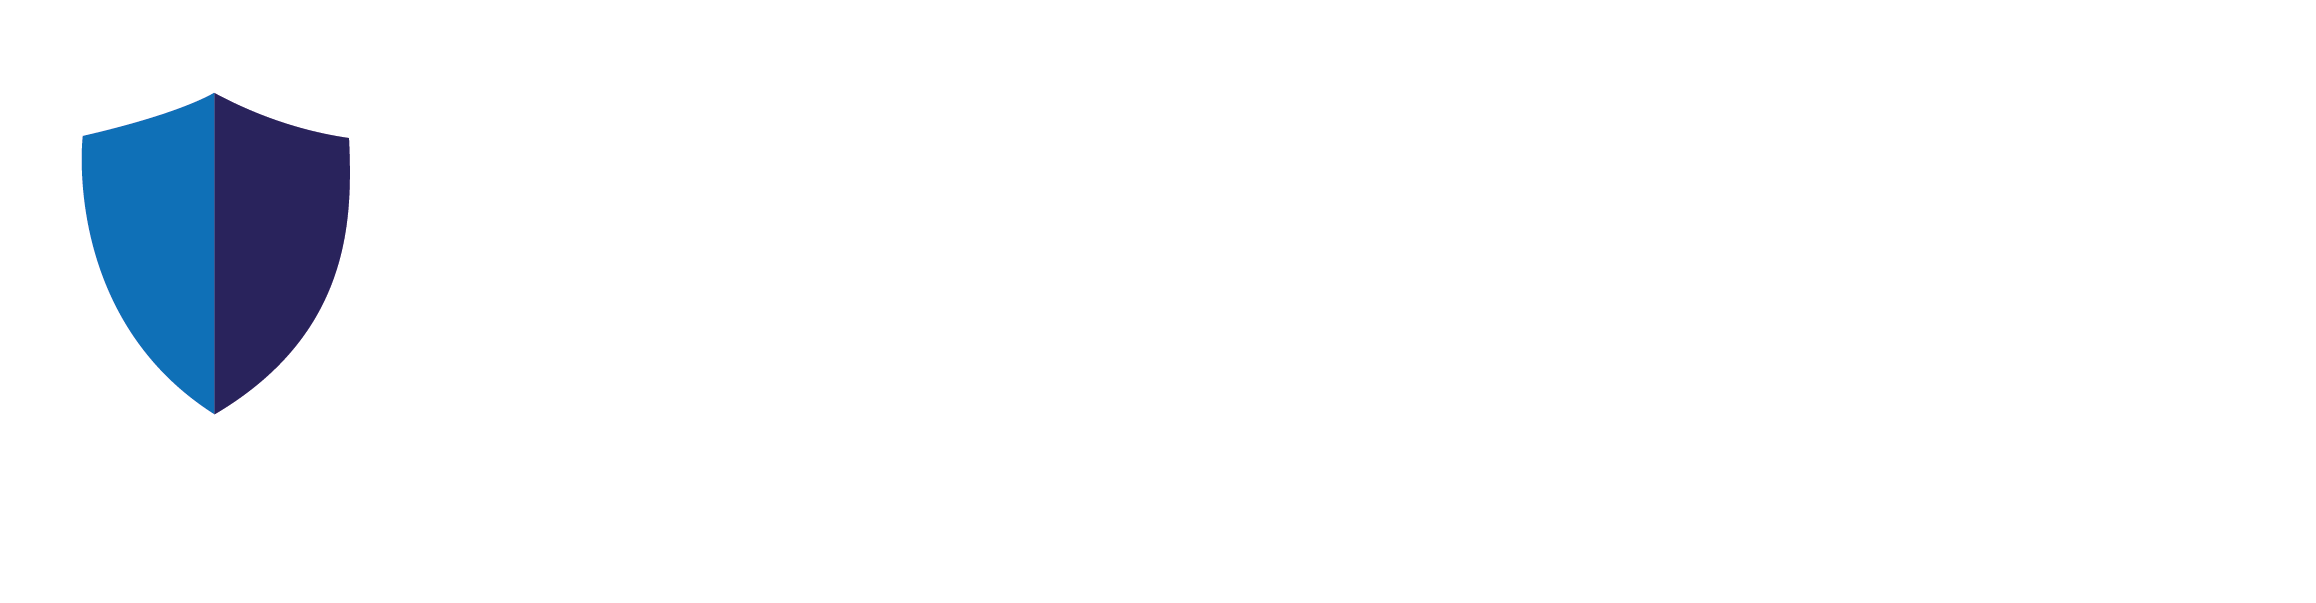 Blackrock - SRG logo_White